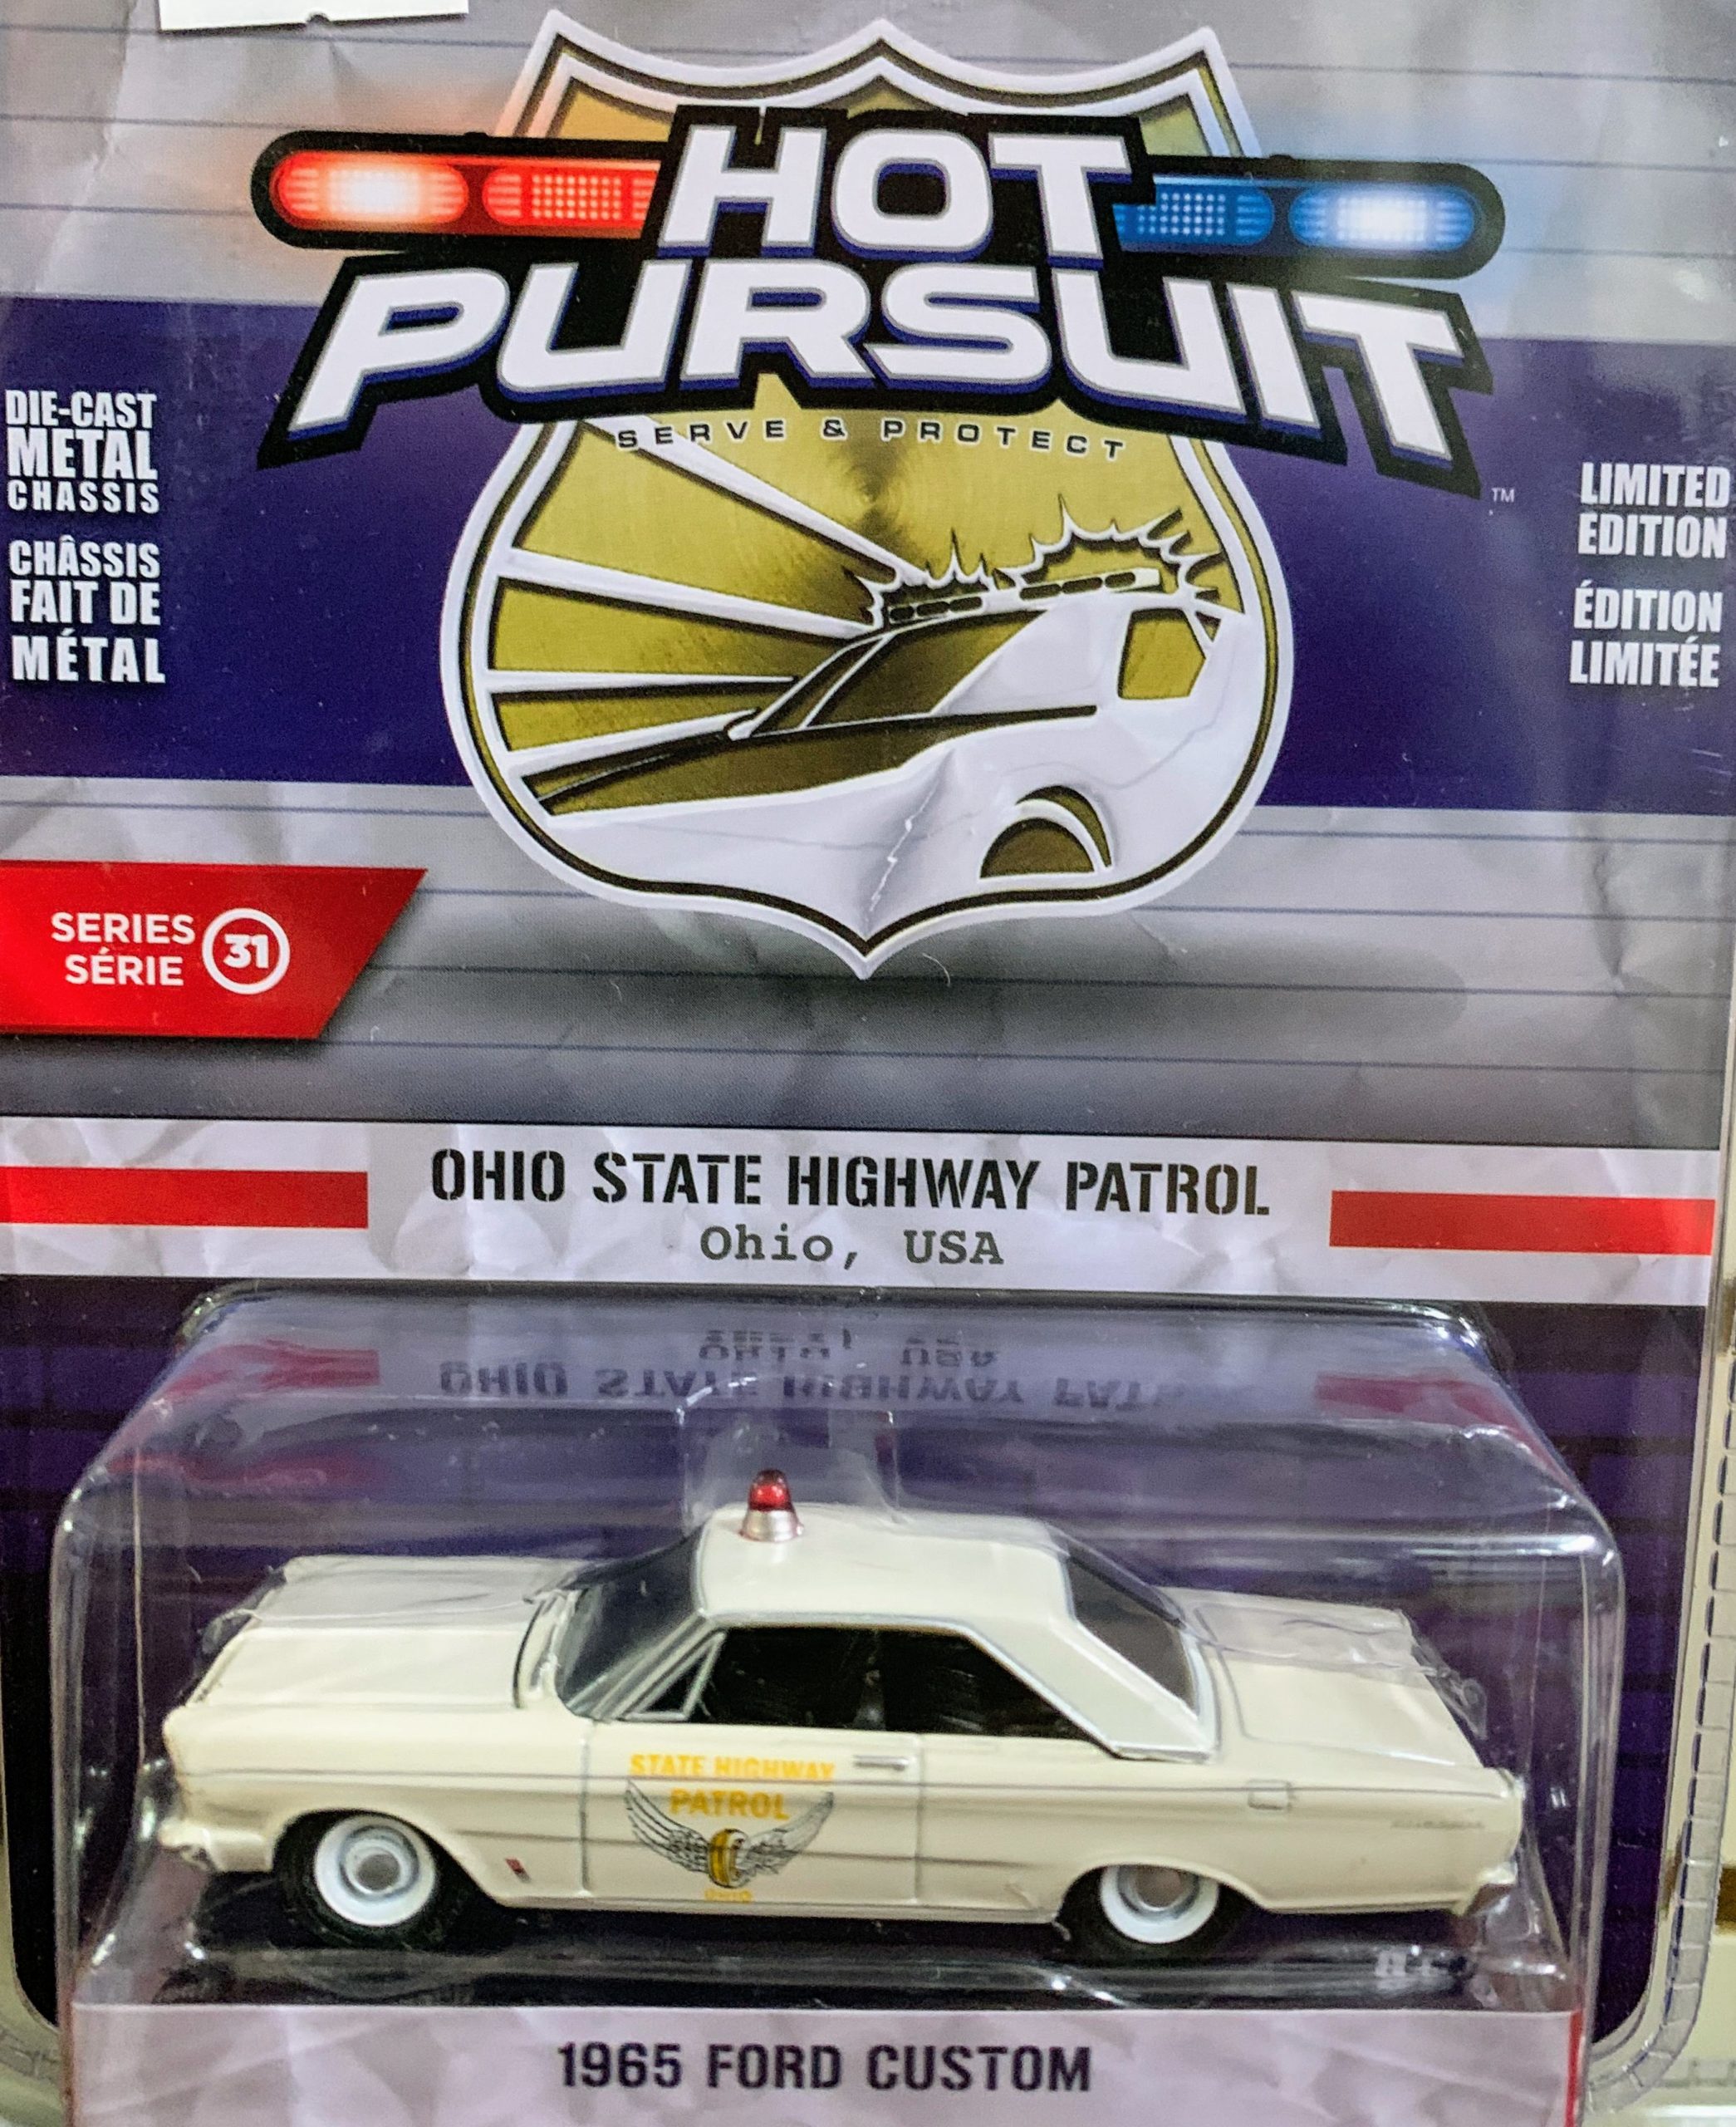 Ford Custom 1965, Ohio State Highway Patrol